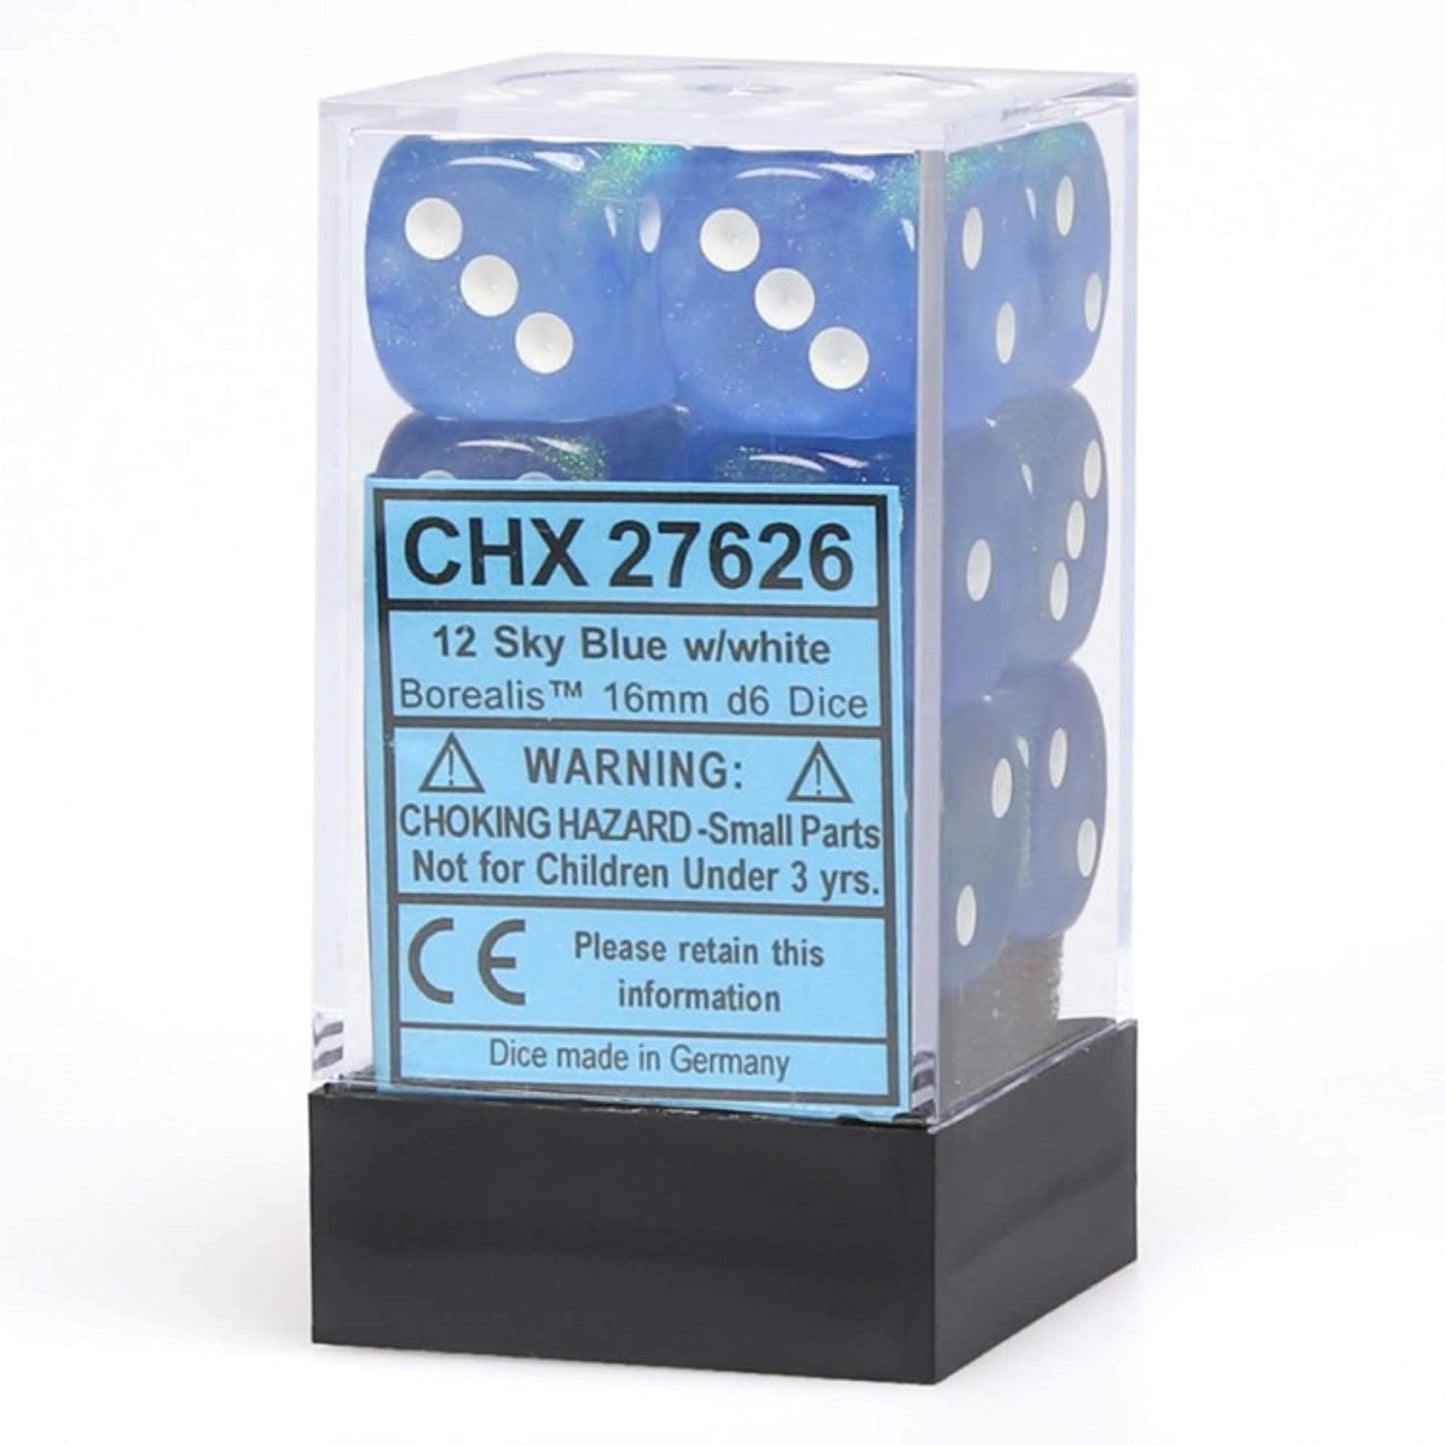 Chessex Dice: D6 Block 16mm - Borealis - Sky Blue with White (CHX 27626) - Gamescape